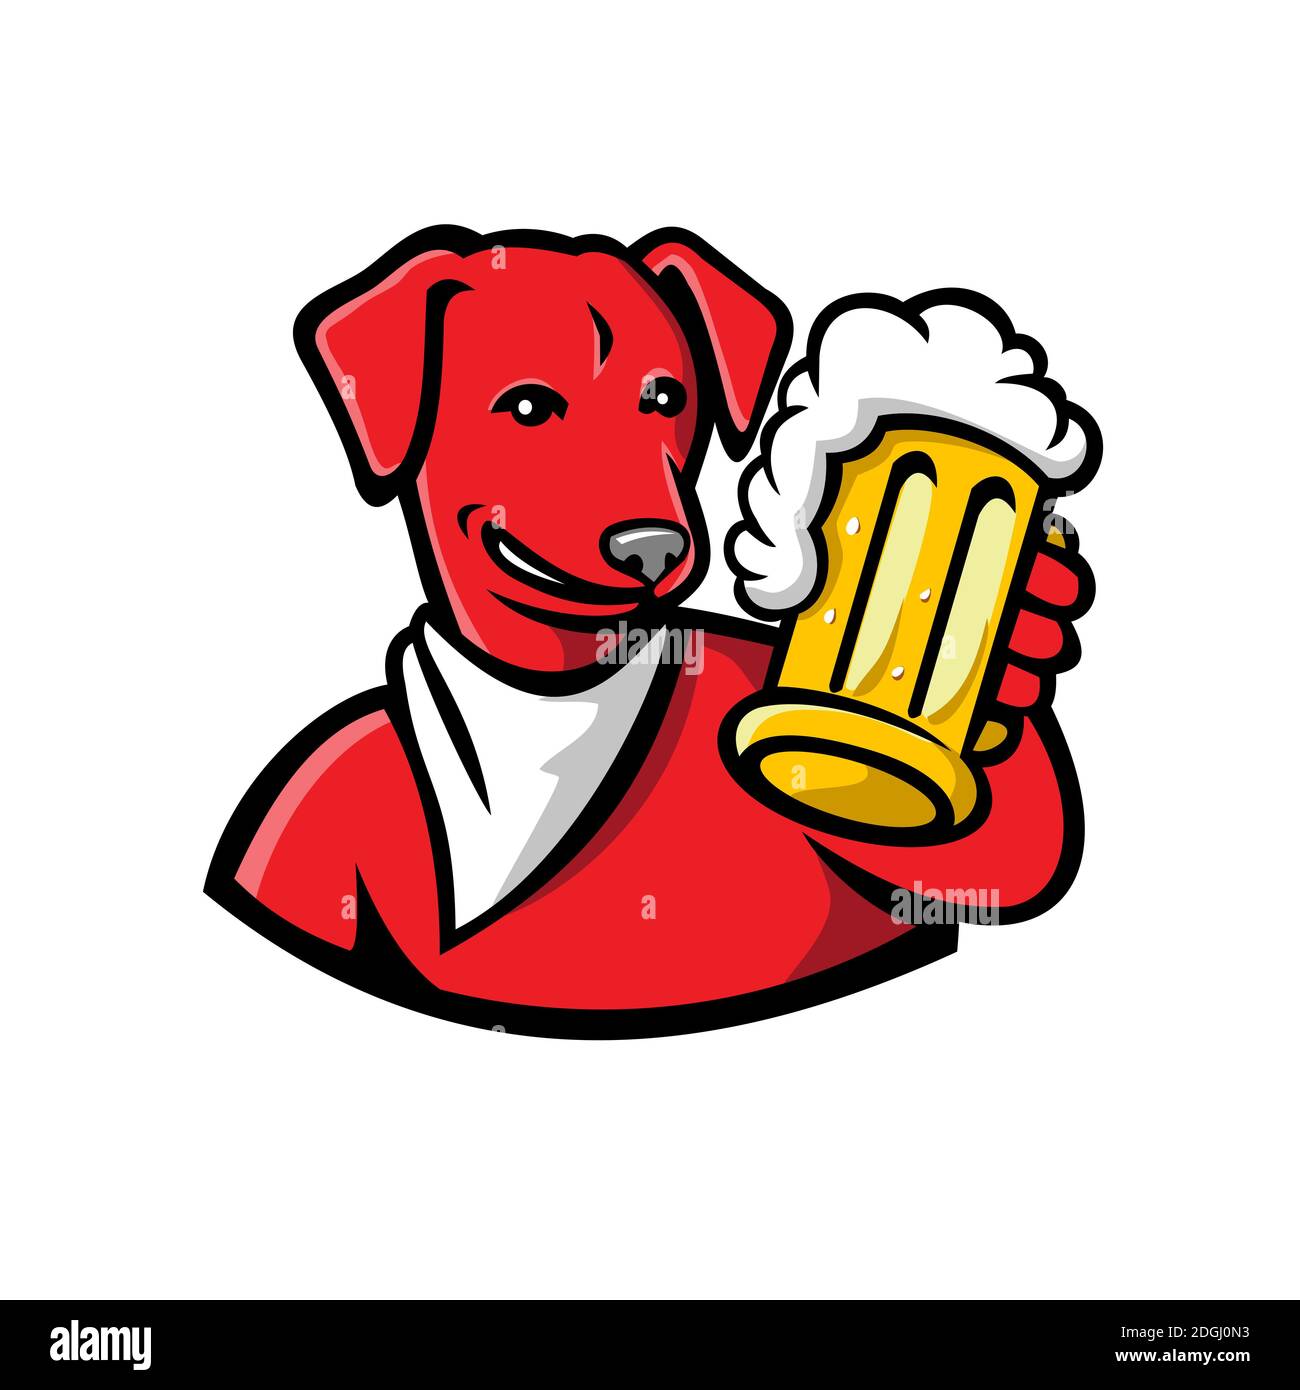 Red English Lab Dog Beer Mug Mascot Stock Photo